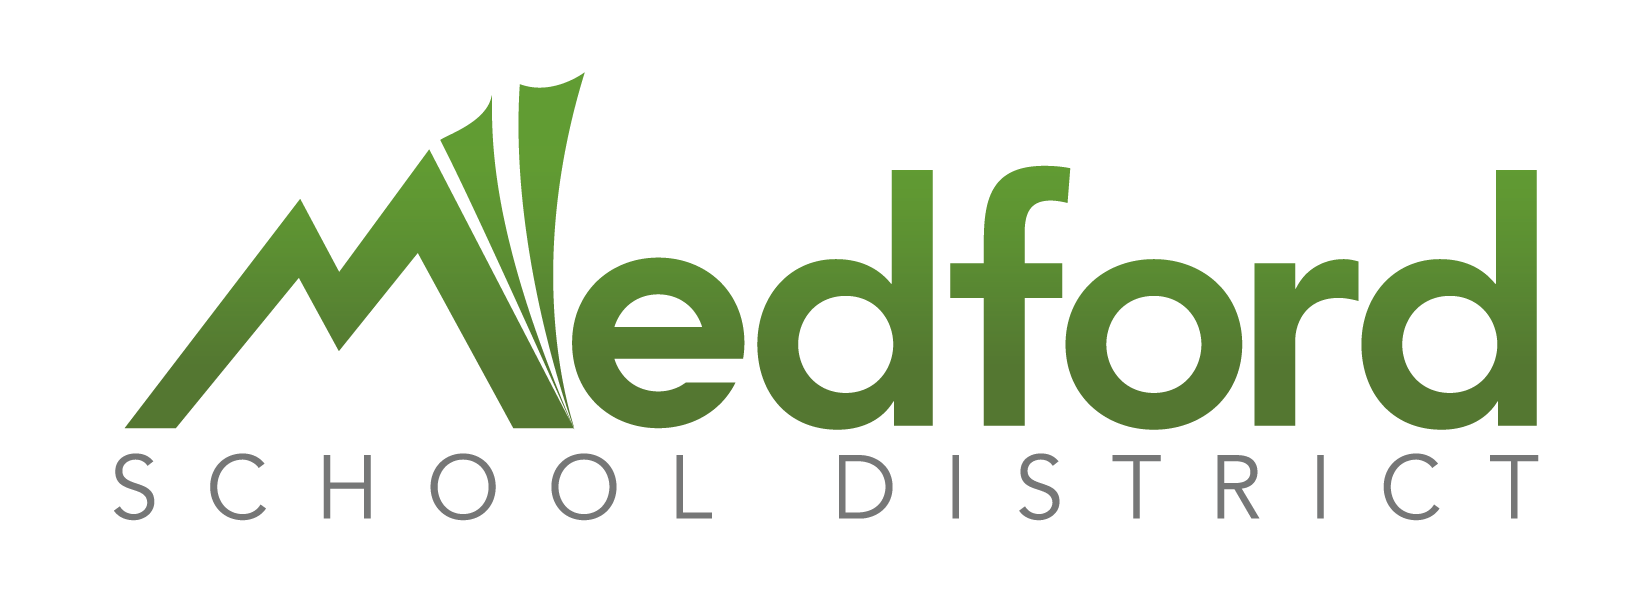 Medford School District's Logo